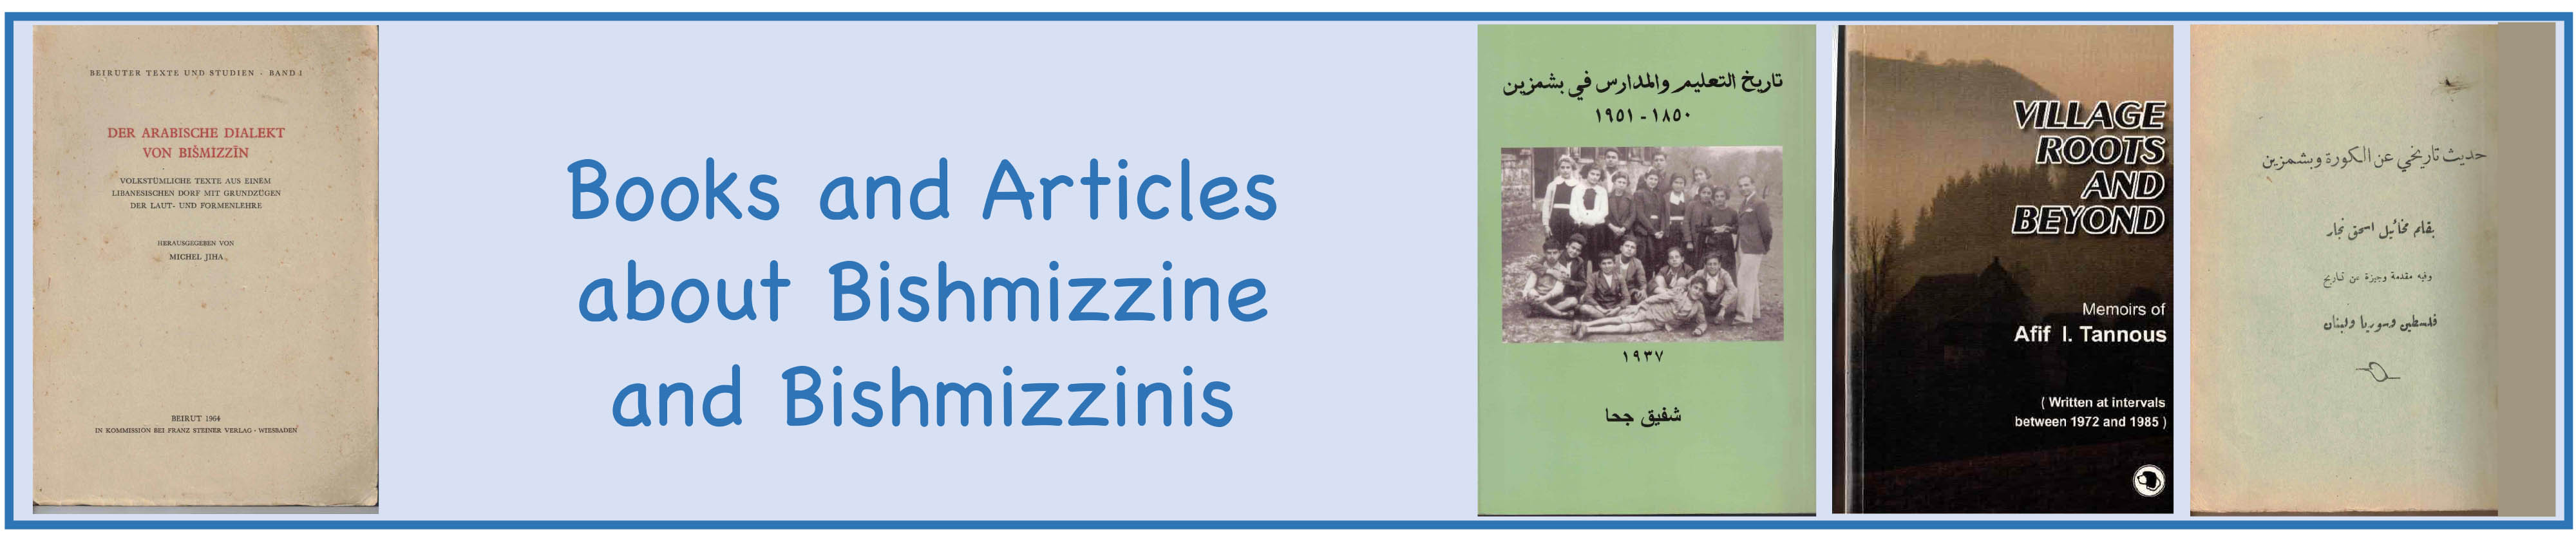 Publication About Bishmizzine & Bishmizzinis banner